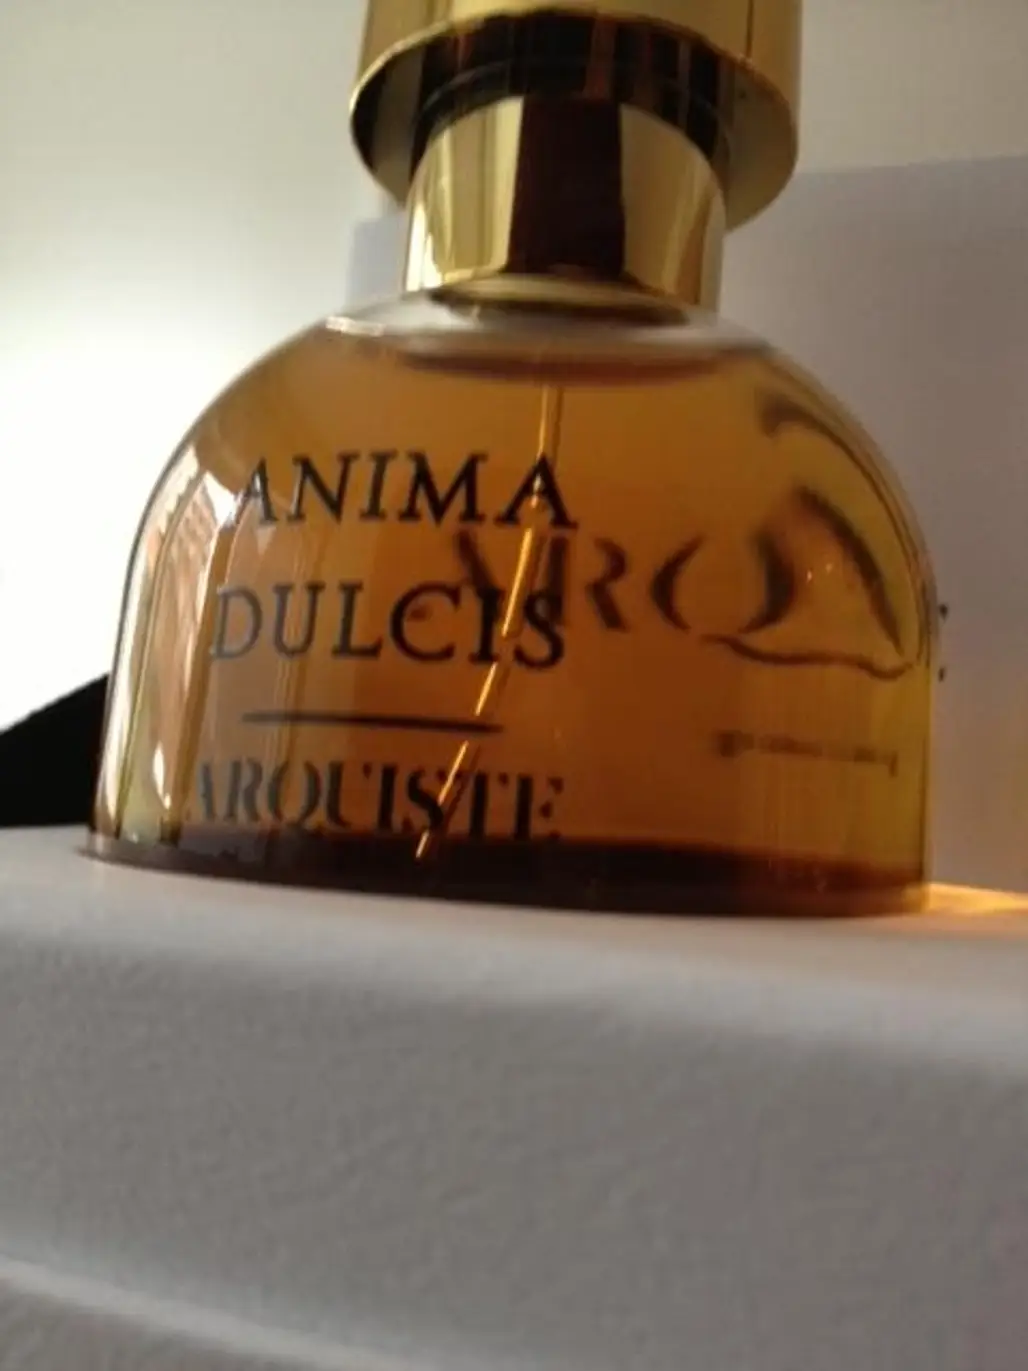 A Seriously Fabulous Perfume